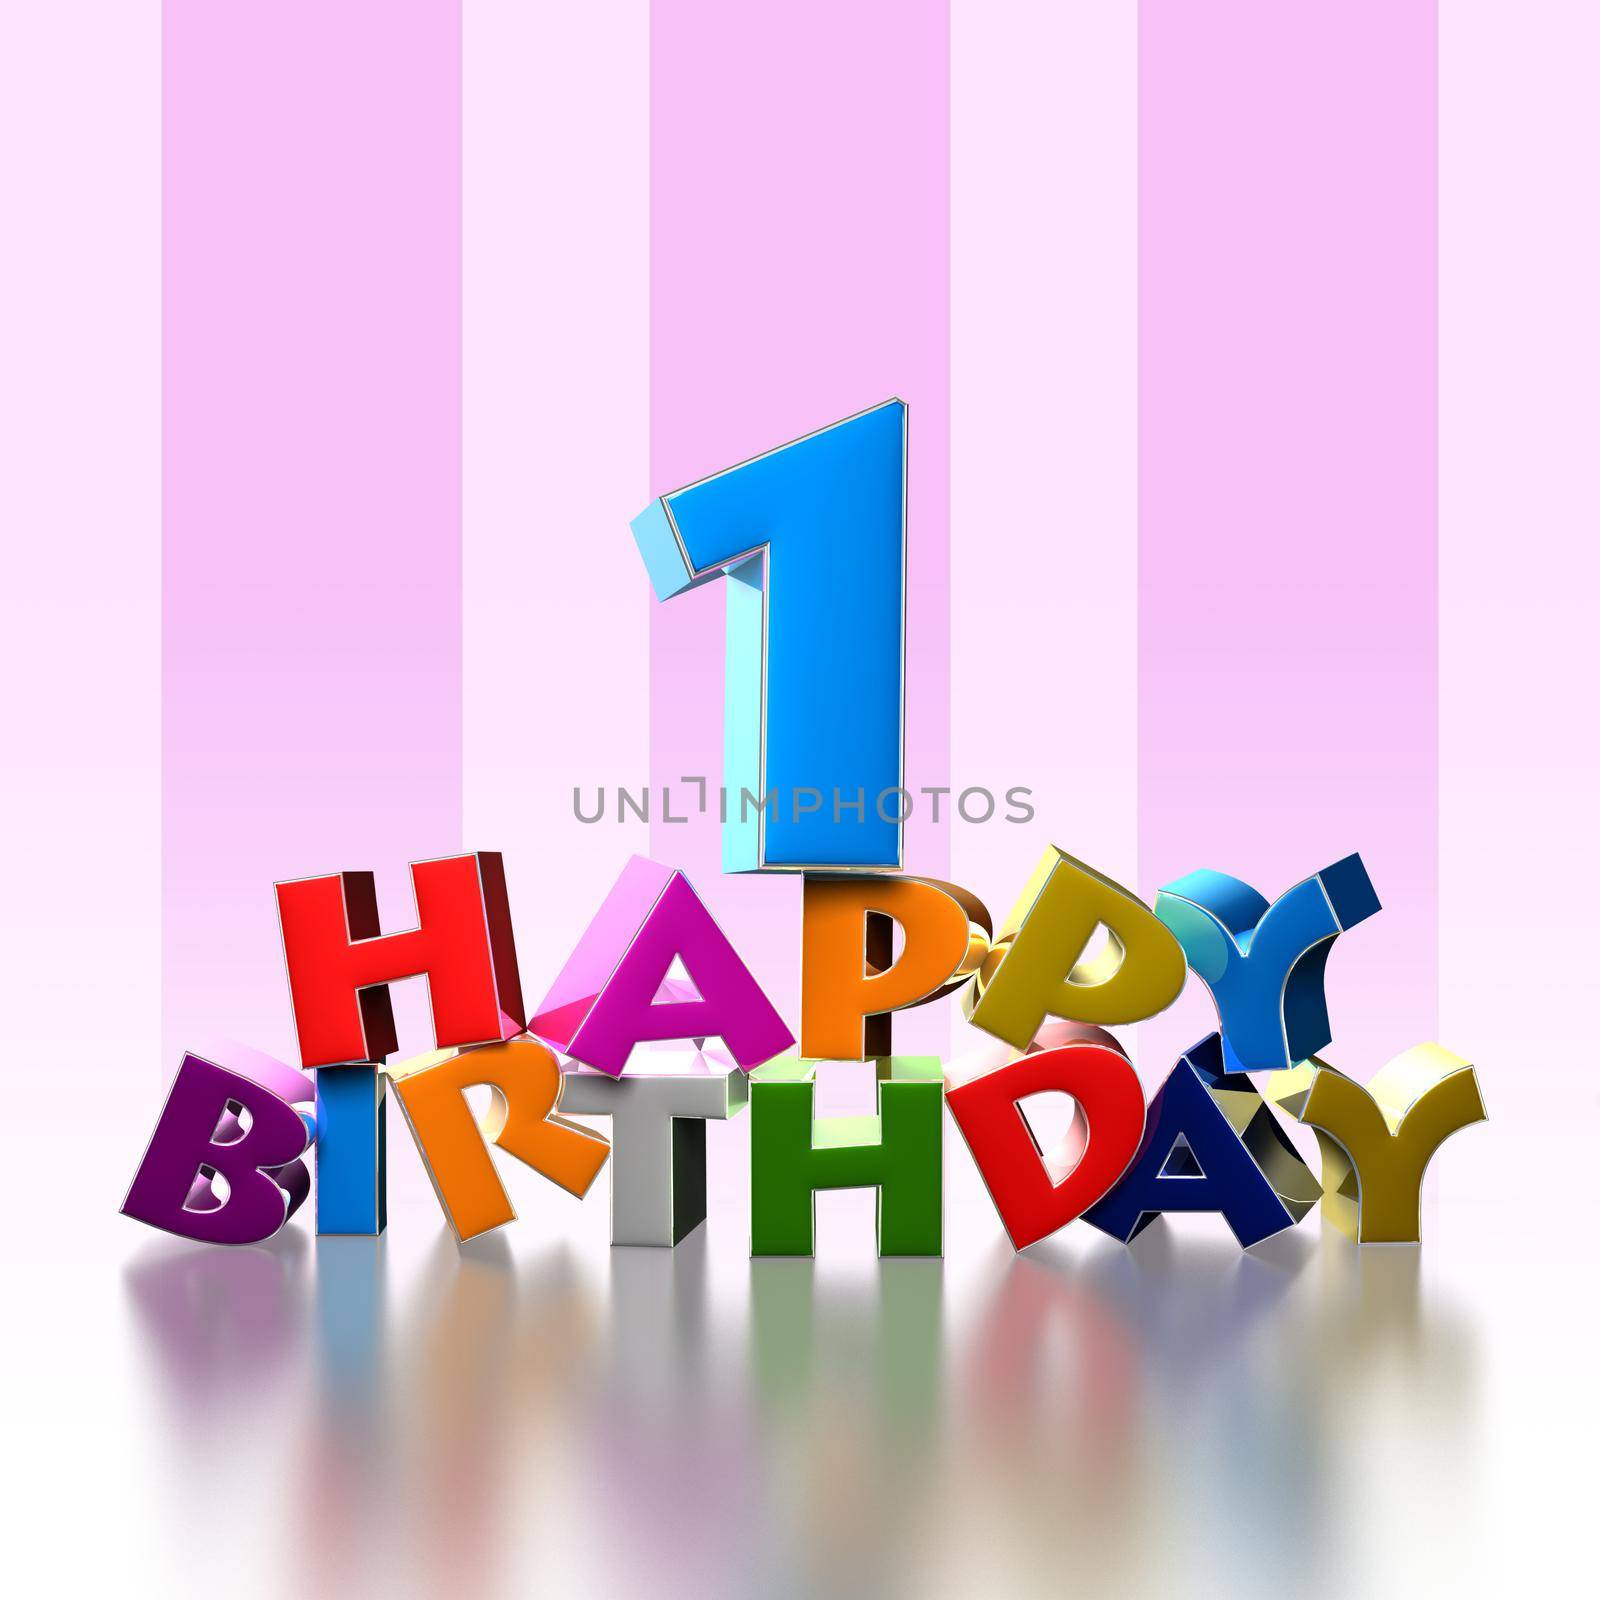 1 happy birthday 3D illustration on pink background.